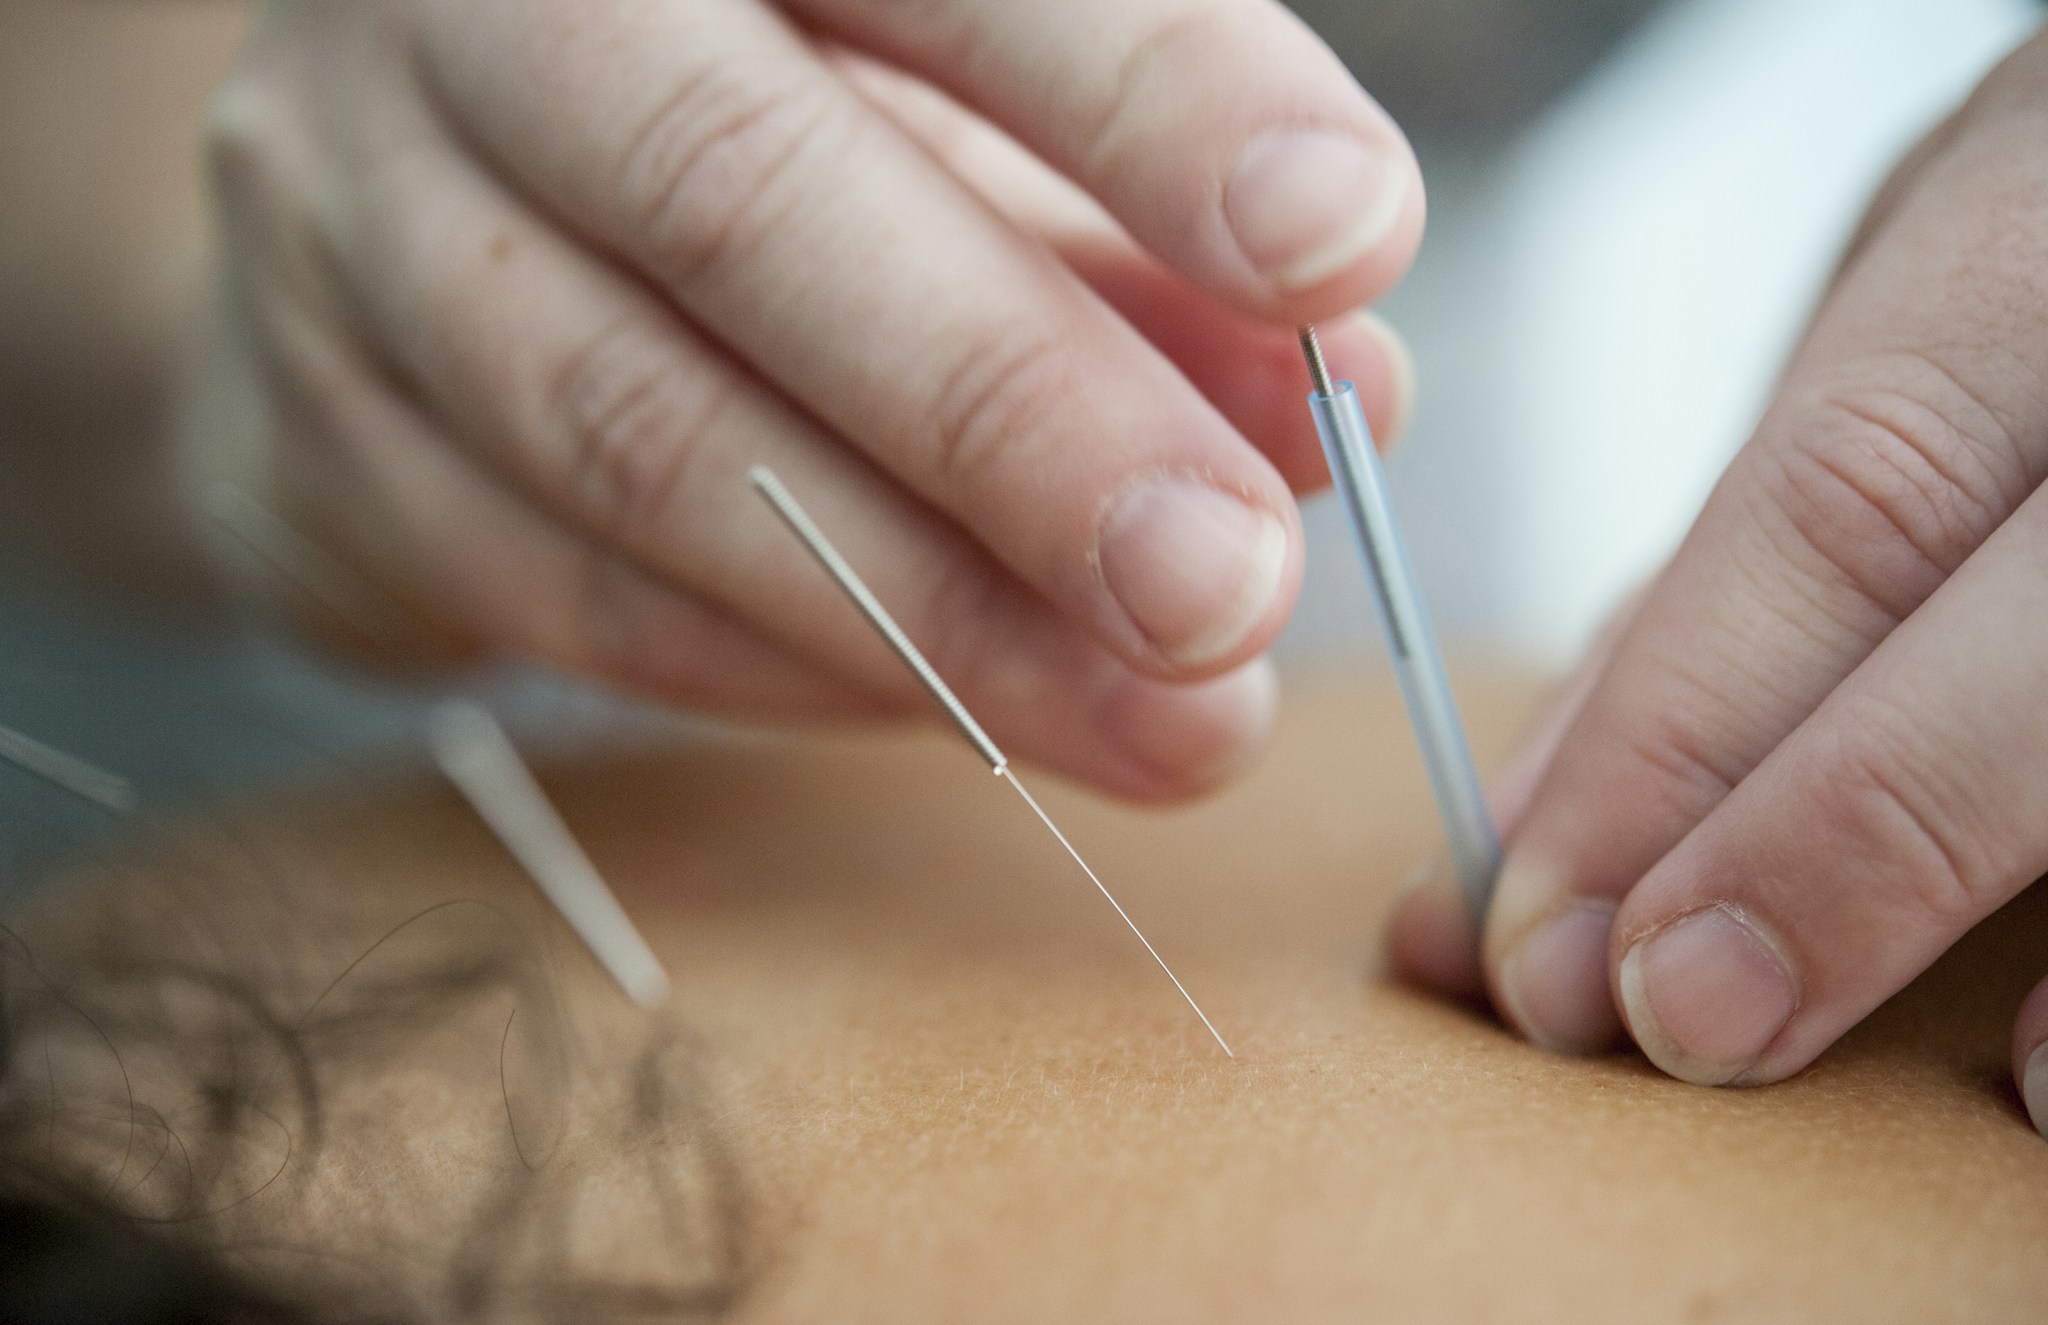 Can Acupuncture Treat Rheumatoid Arthritis? - Everyday Health